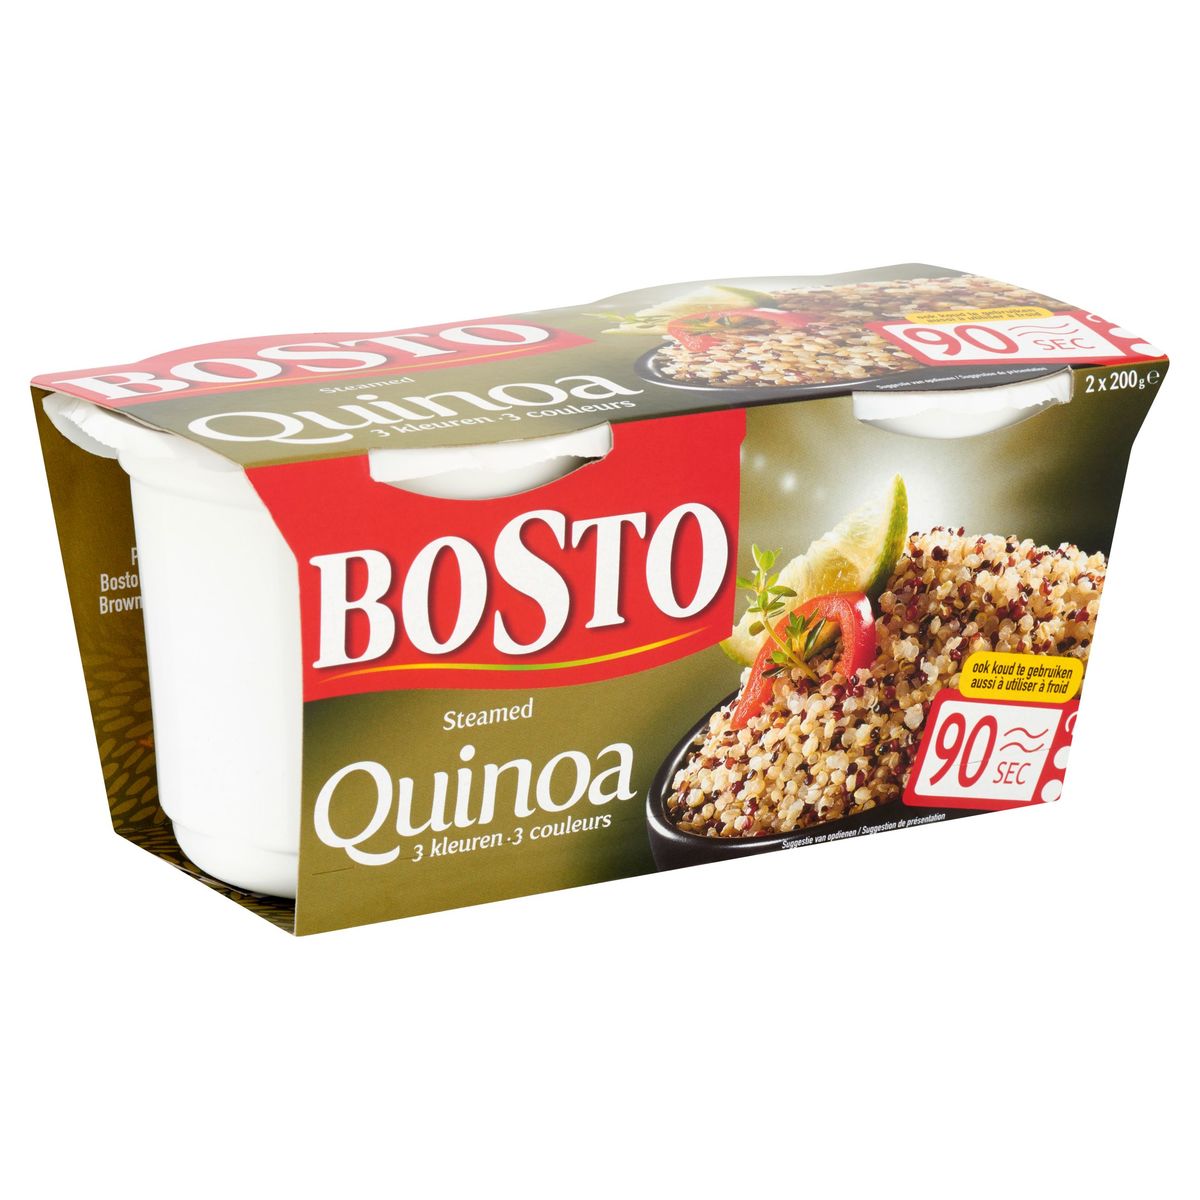 Bosto Steamed Quinoa 3 Kleuren 2 x 200 g